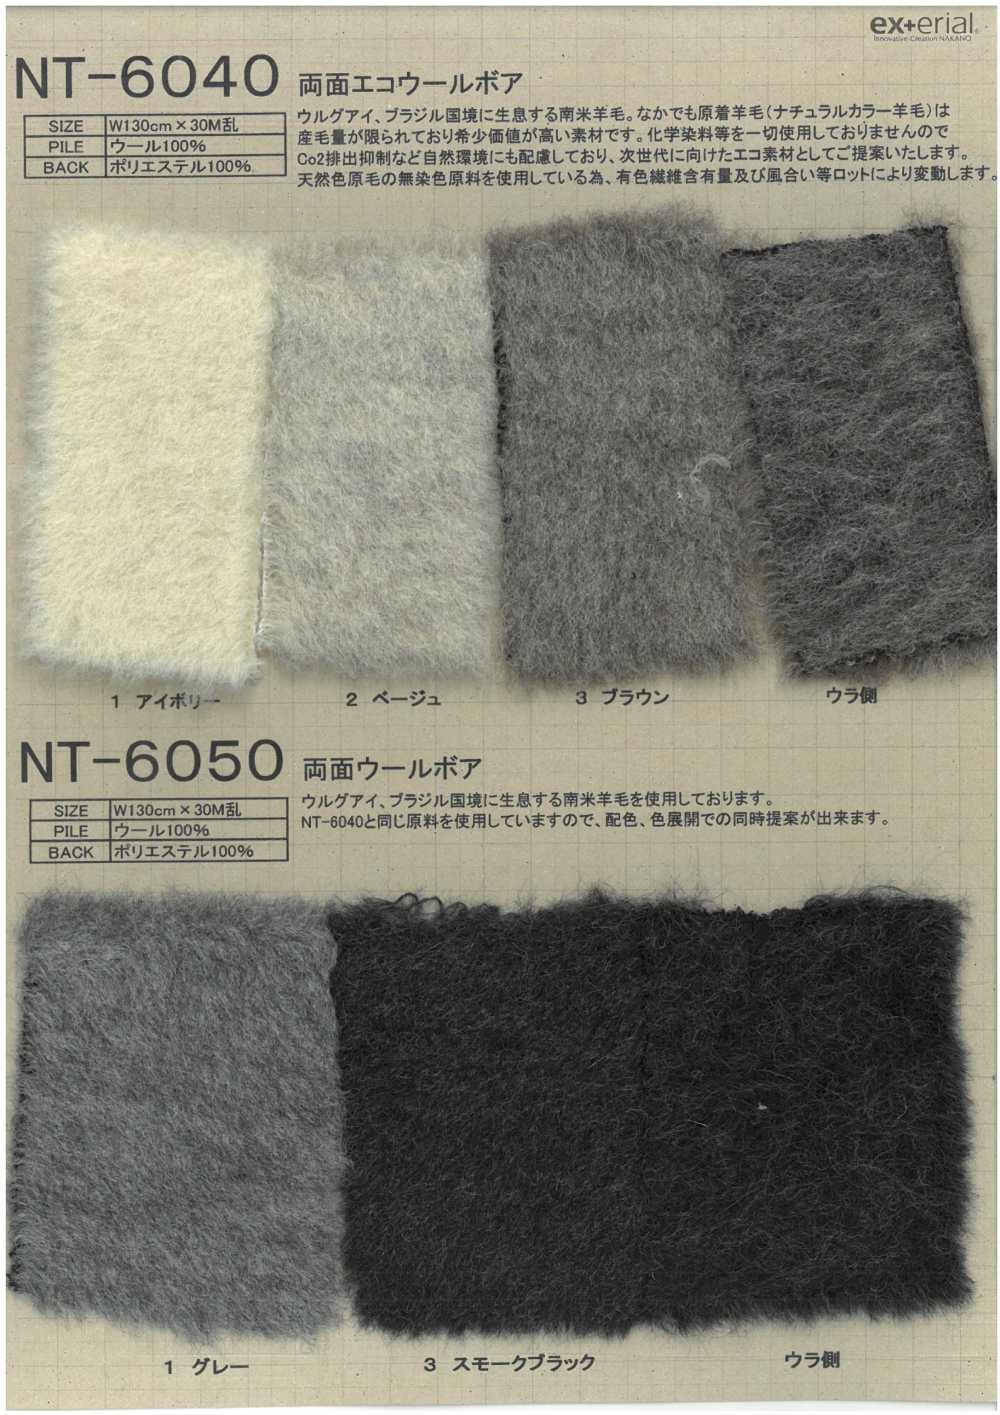 NT-6040 工艺毛皮【双面生态羊毛围巾】[面料] 中野袜业